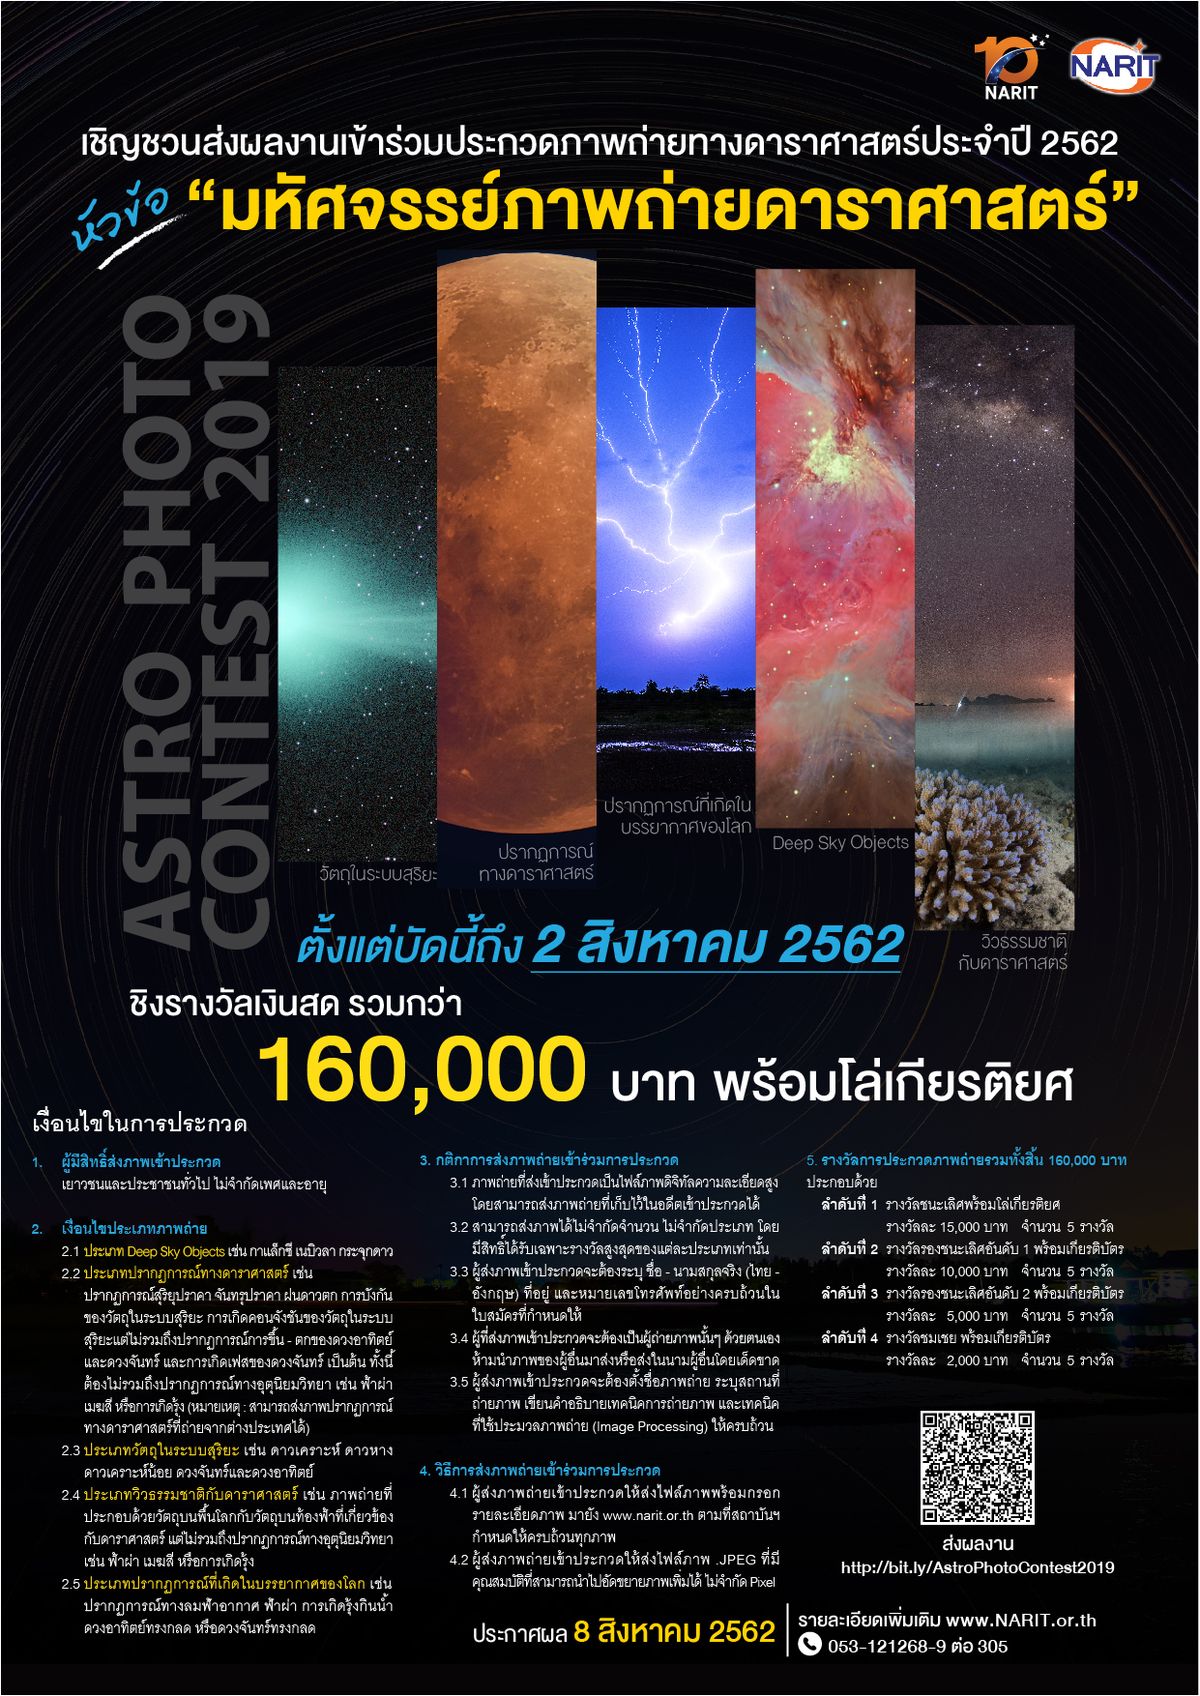 astro photo contest 2562 poster